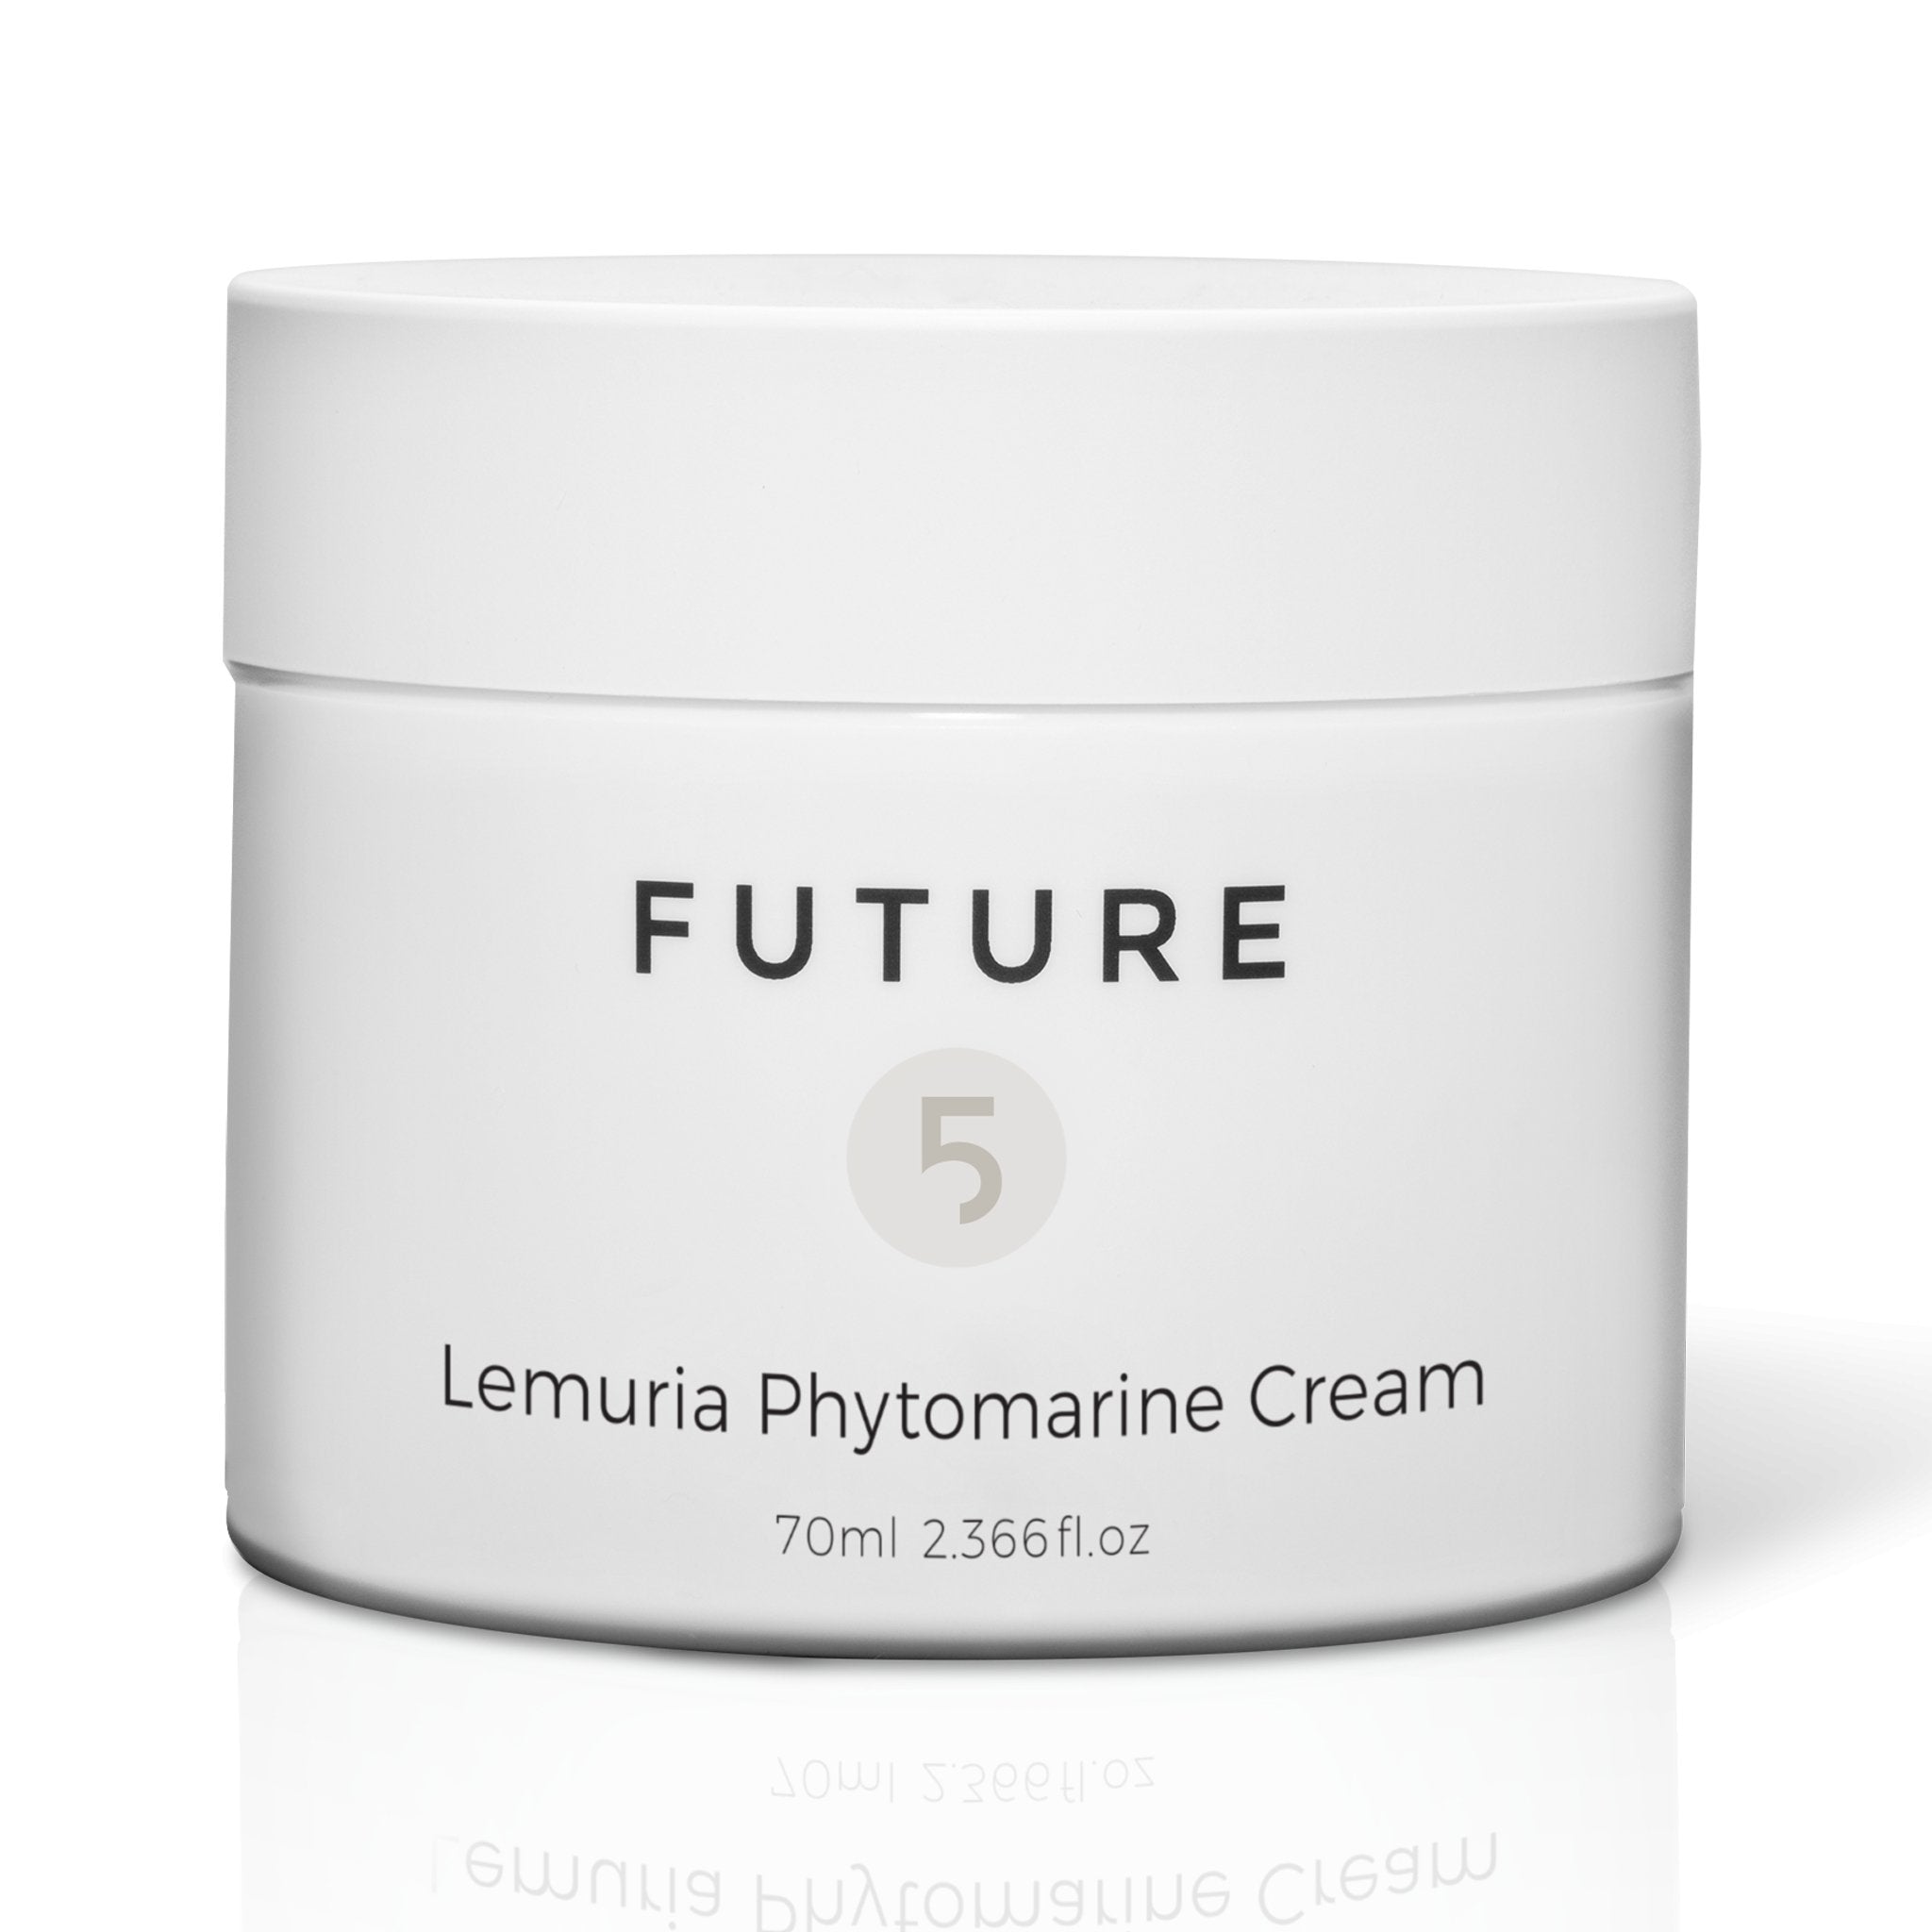 Lemuria Phytomarine Cream - Future Cosmetics The 5 Elements